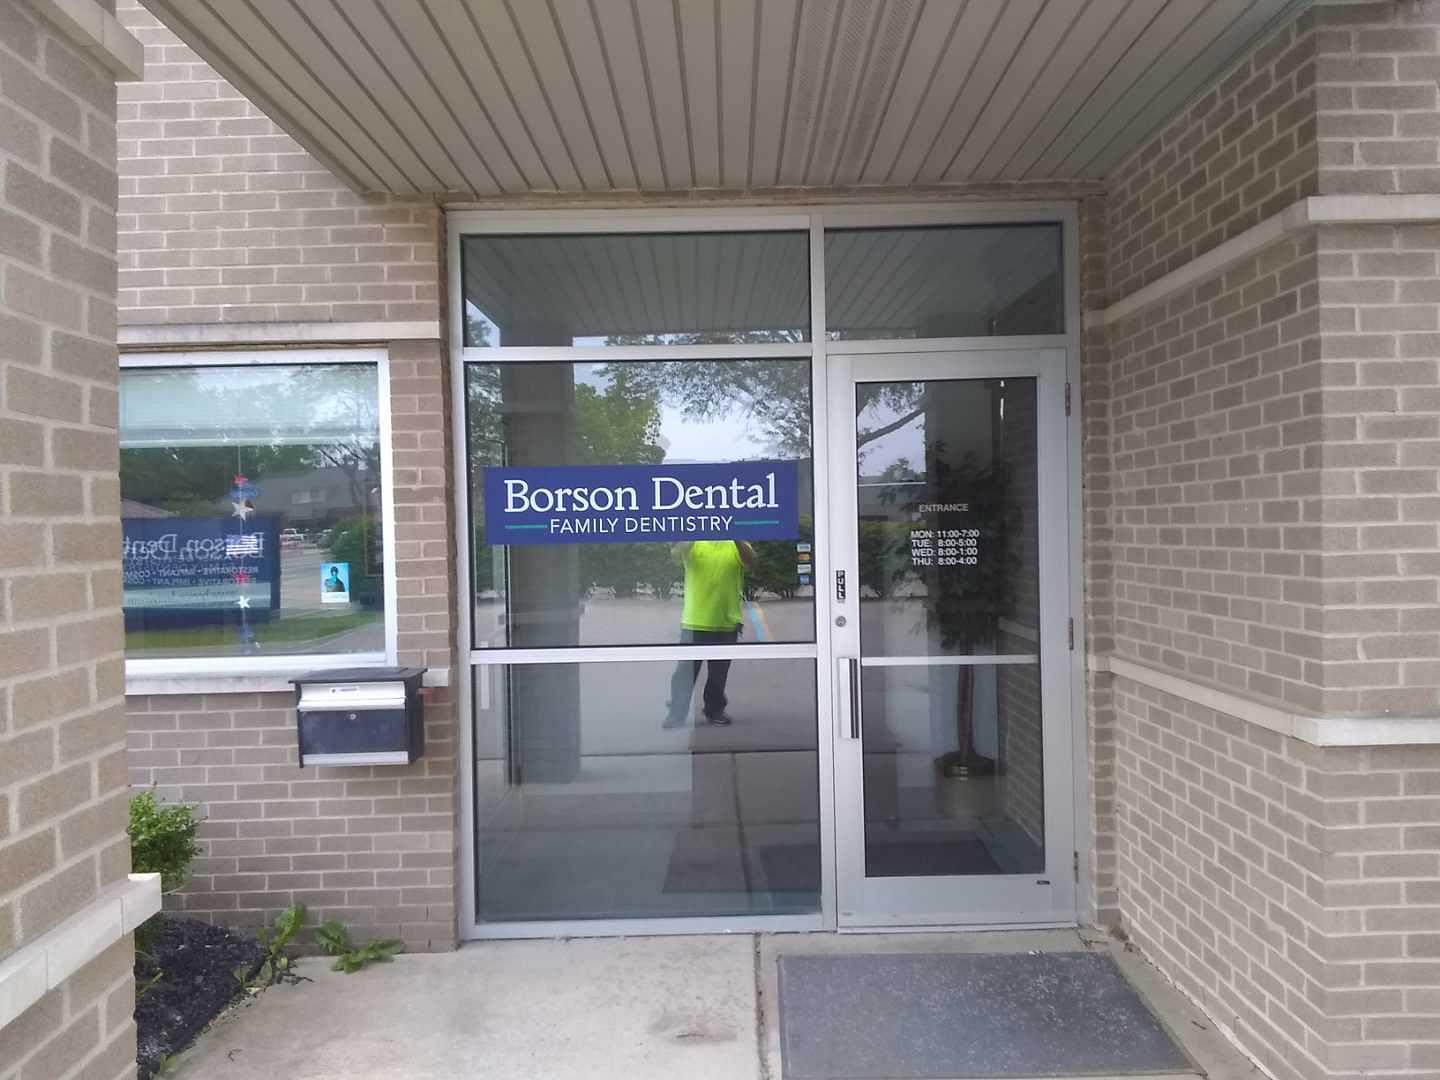 Borson Dental Family Dentistry window graphics vinyl logo